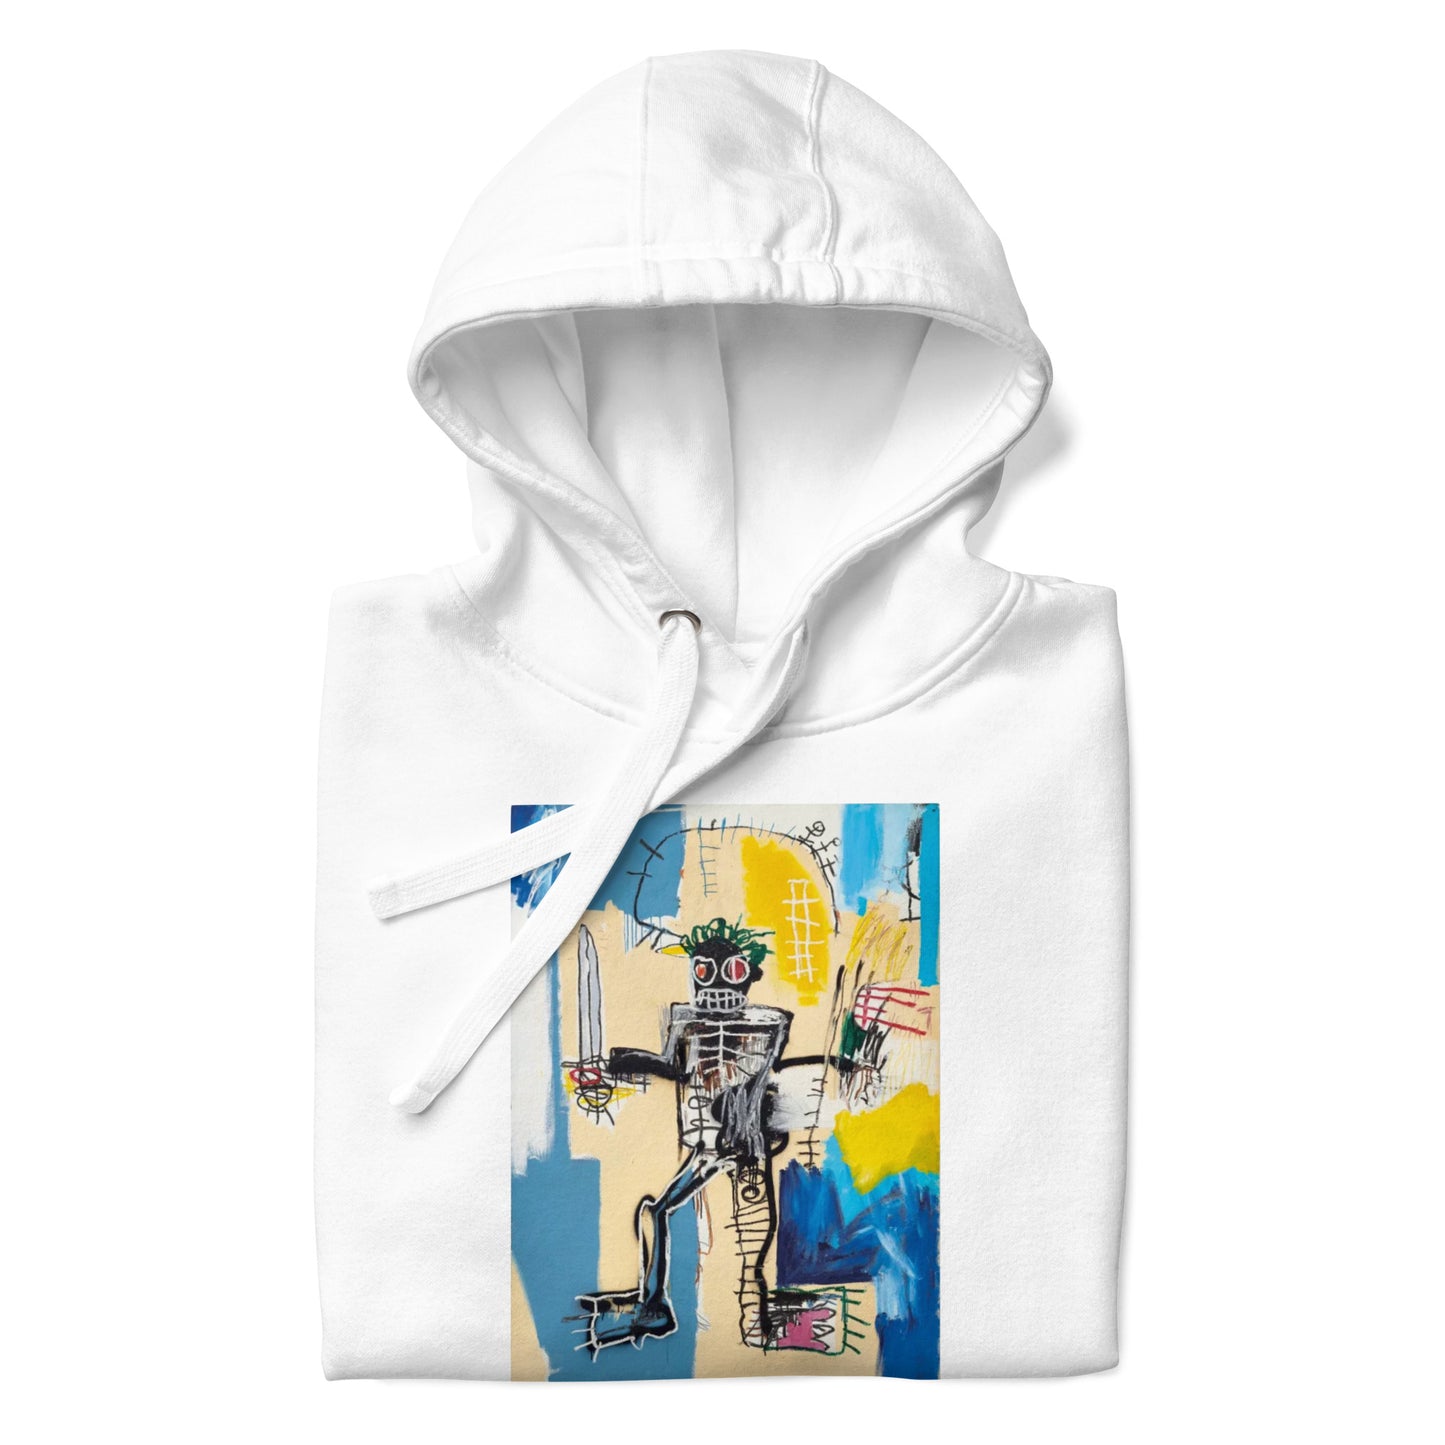 Jean-Michel Basquiat "Warrior" Artwork Printed Premium Streetwear Sweatshirt Hoodie White